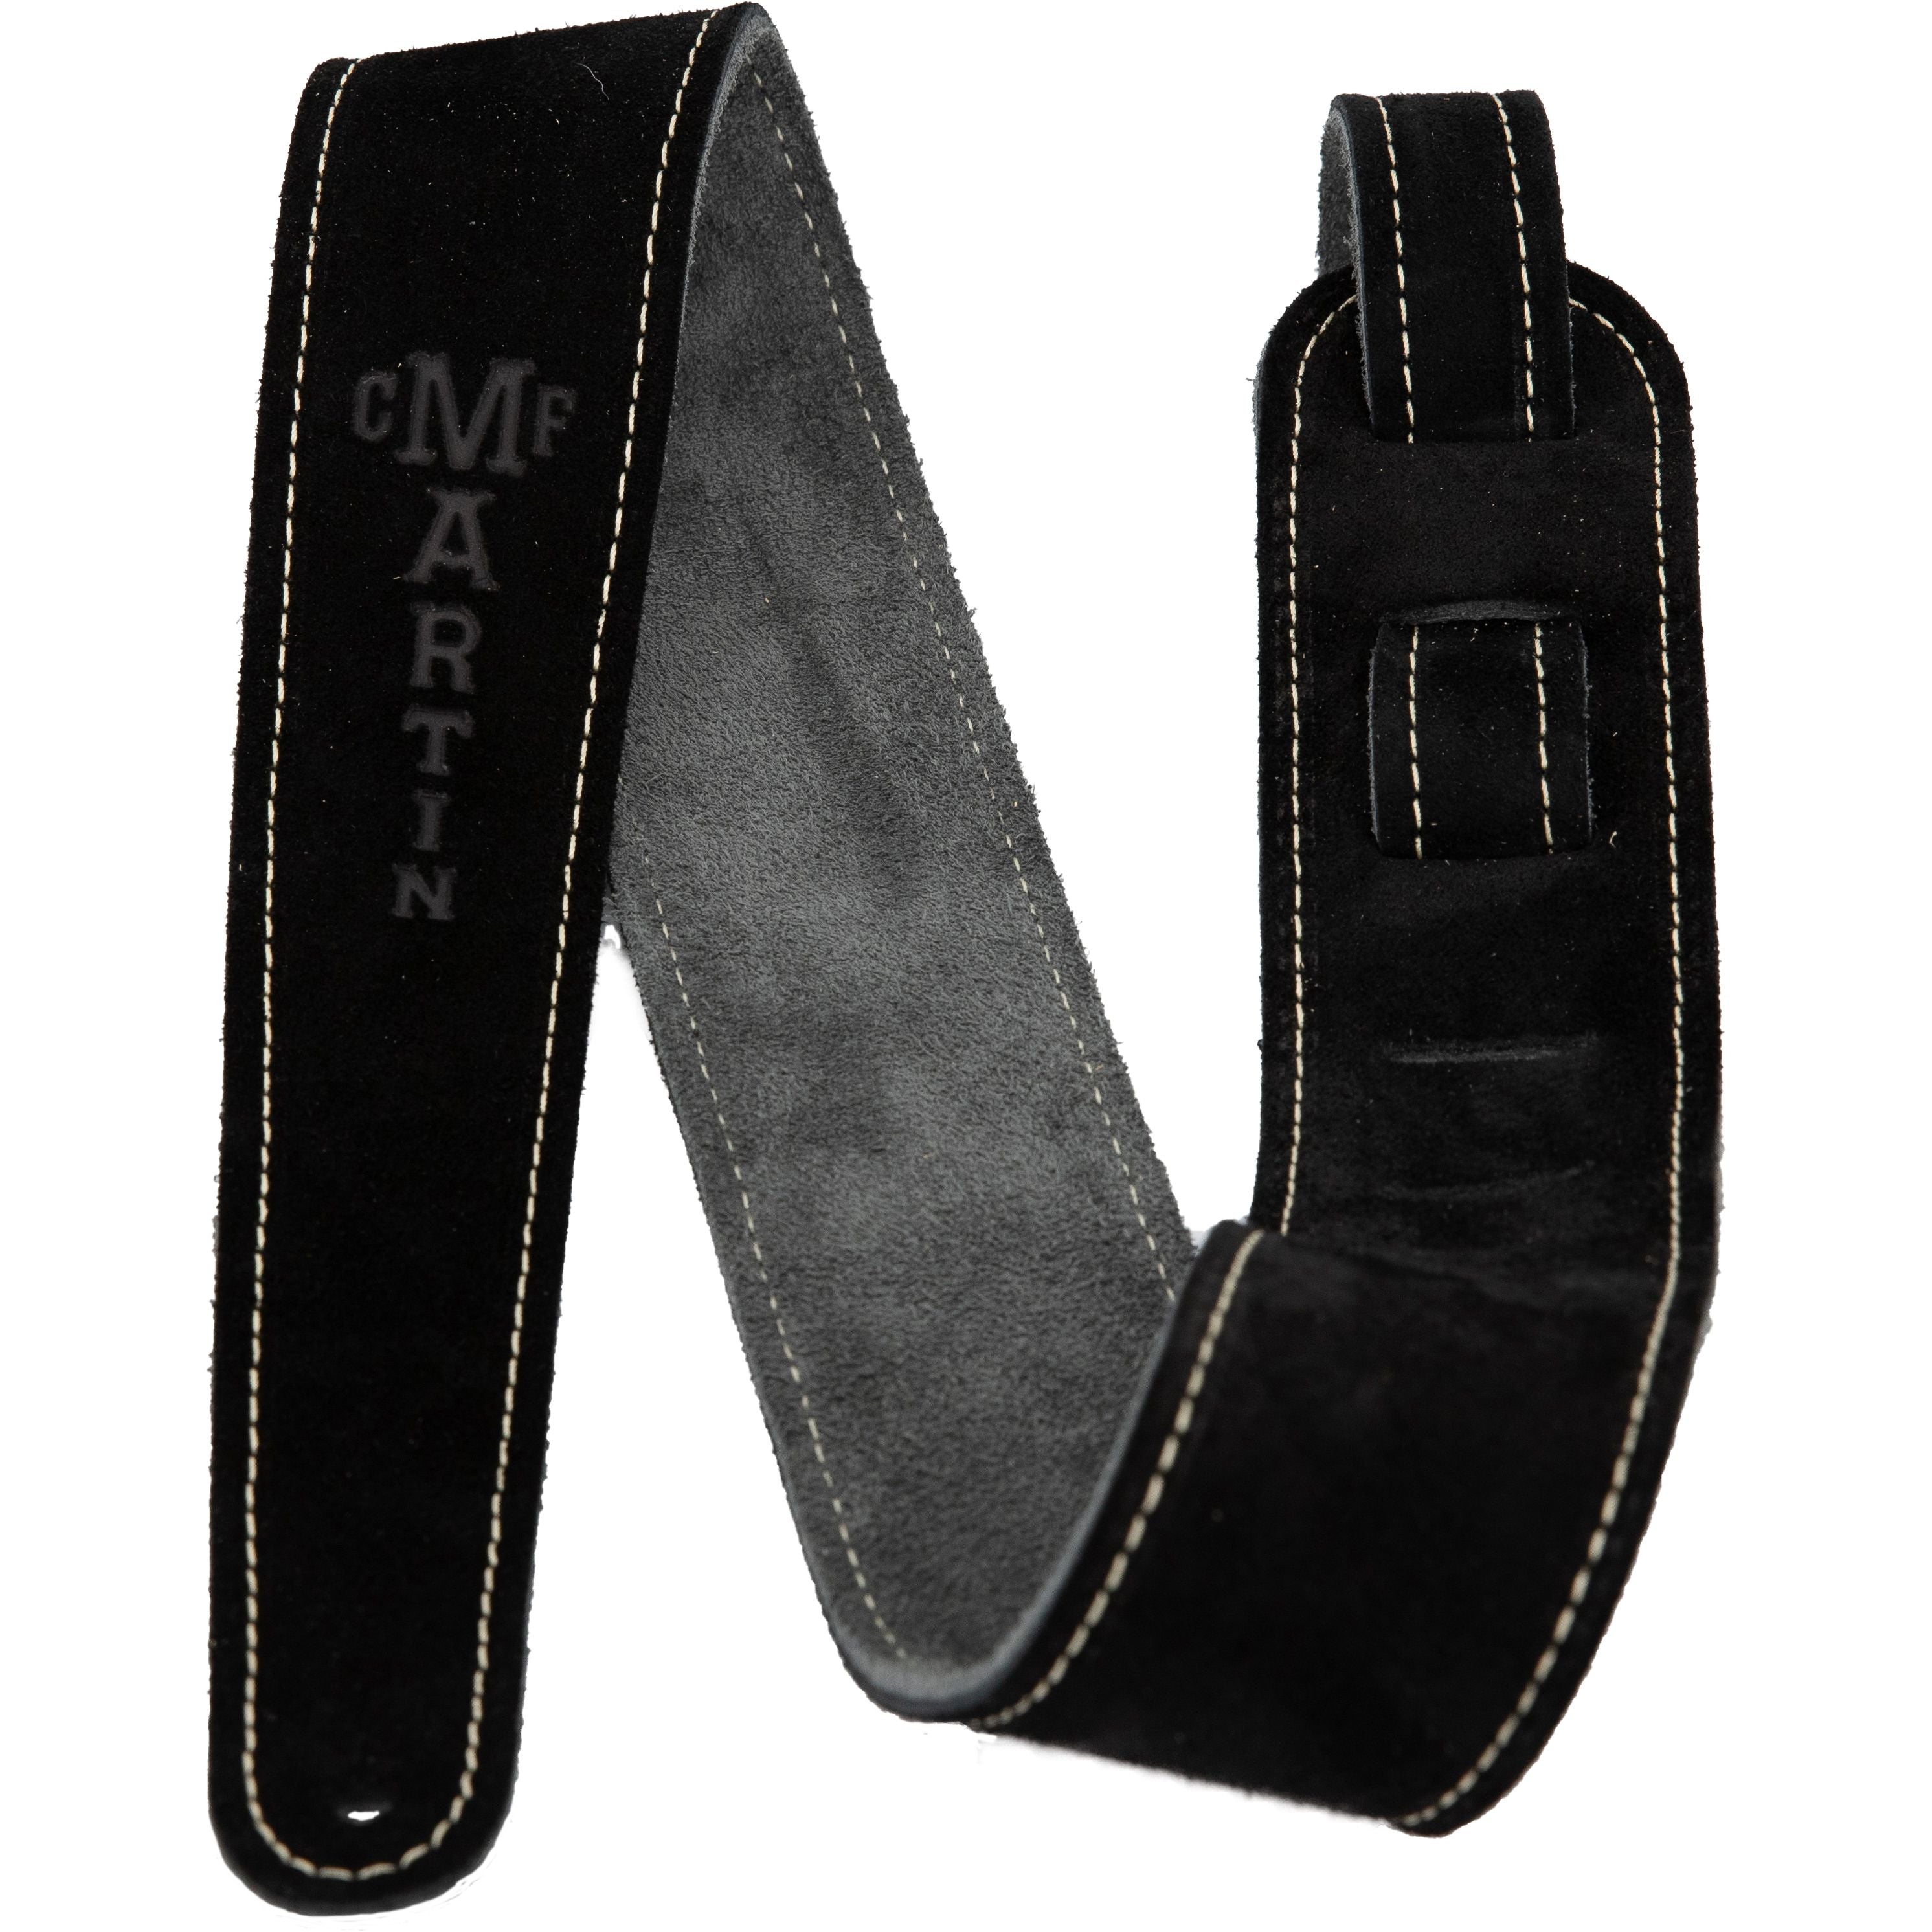 Martin Suded Leather Strap Black (A0016)